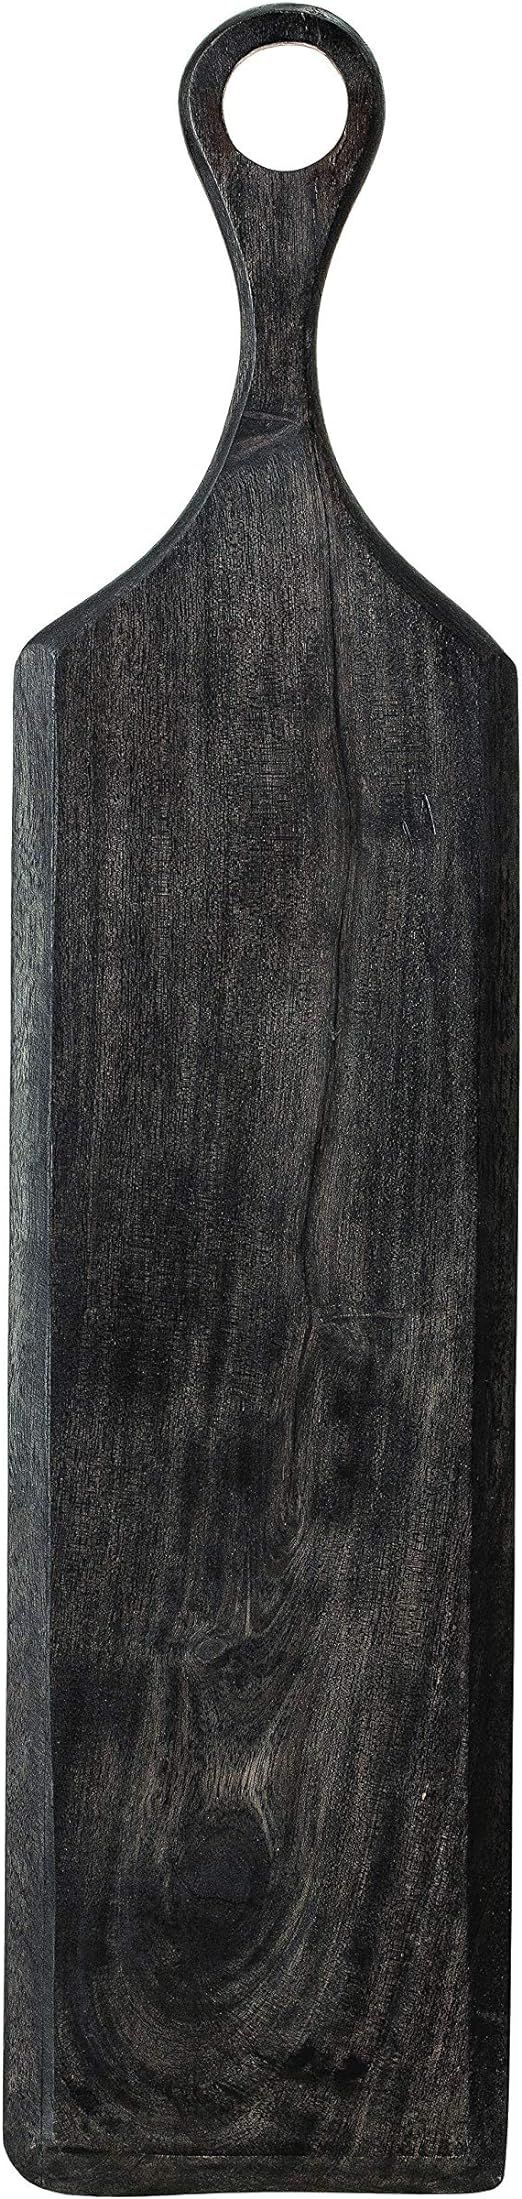 Bloomingville Black Acacia Wood Tray/Cutting Board | Amazon (US)